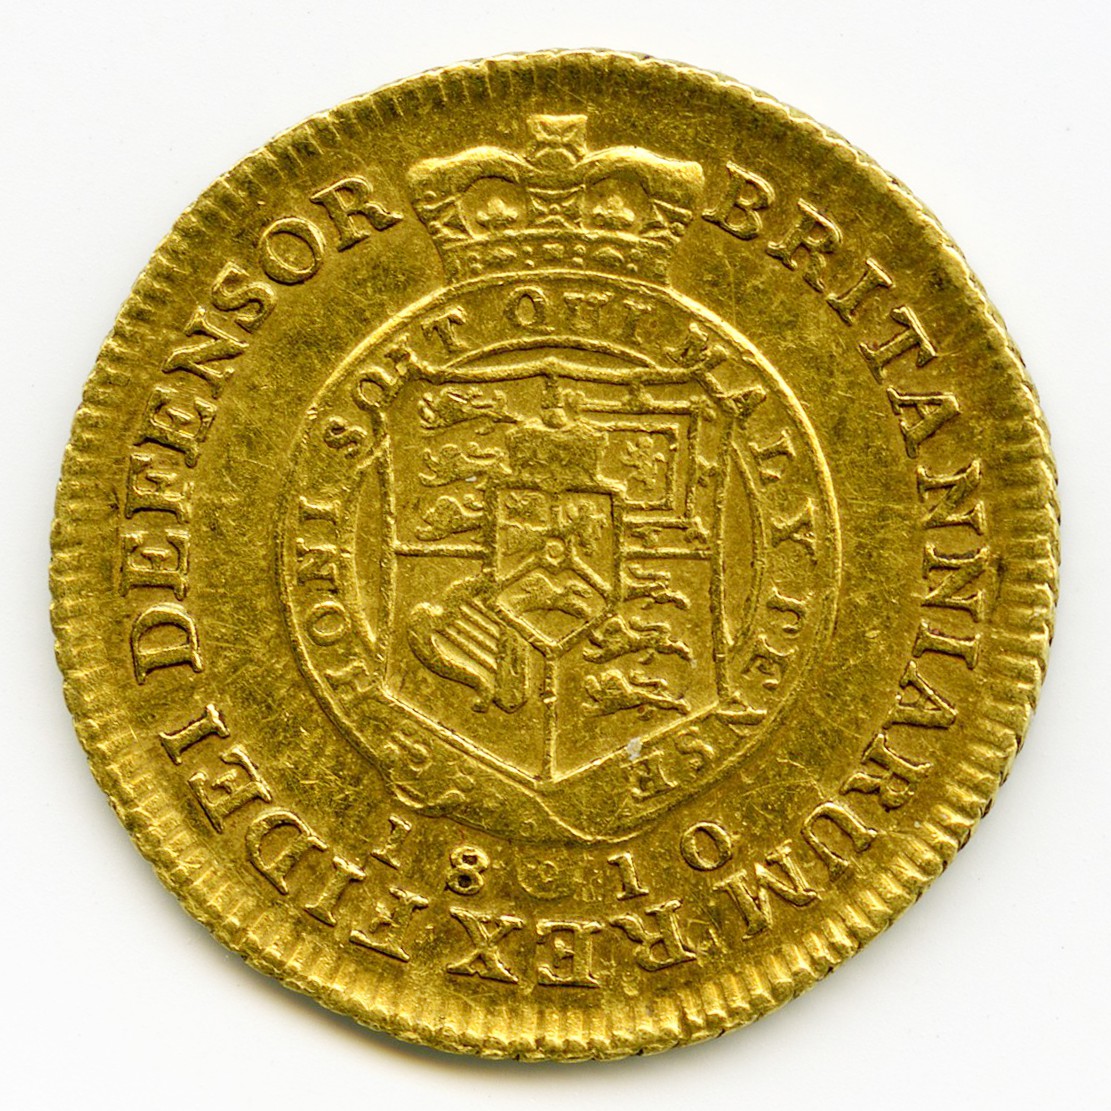 Grande-Bretagne - 1/2 Guinea - 1810 revers